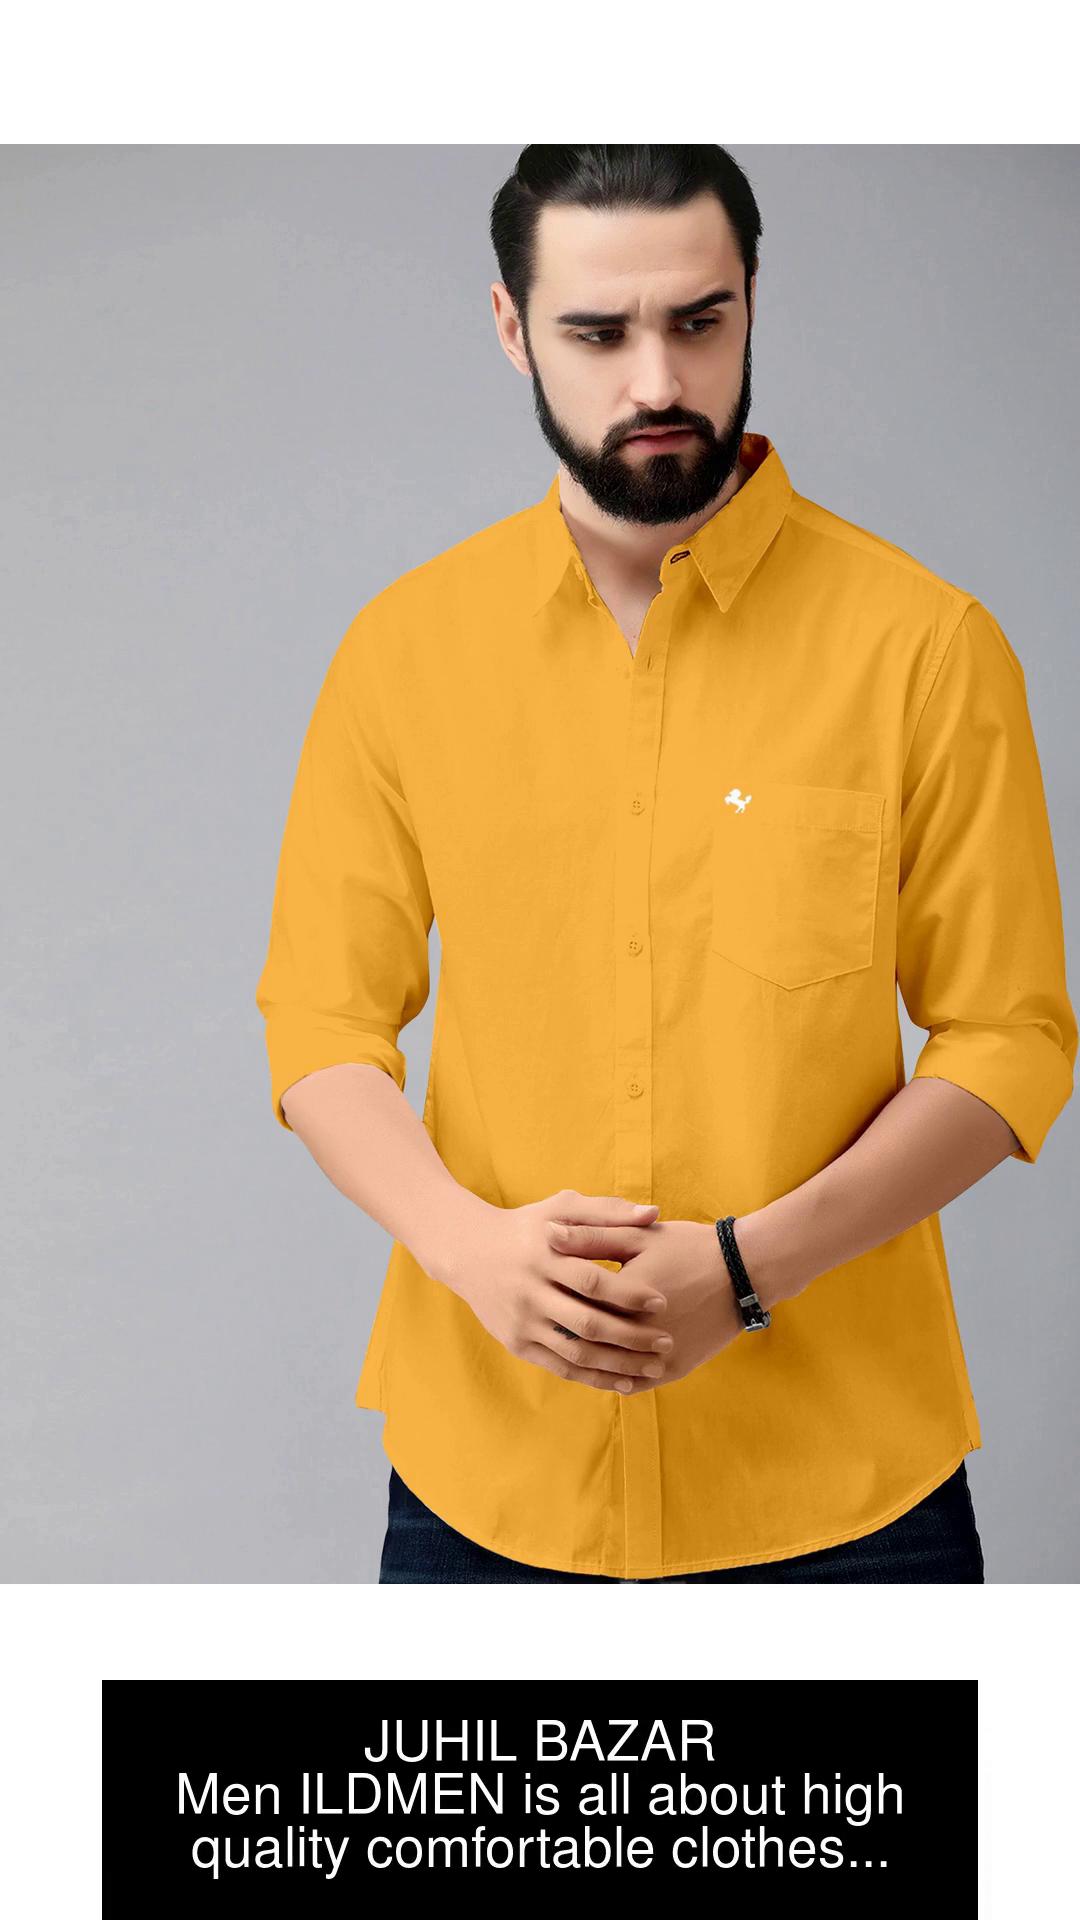 JUHIL BAZAR Men Solid Casual Yellow Shirt - Buy JUHIL BAZAR Men